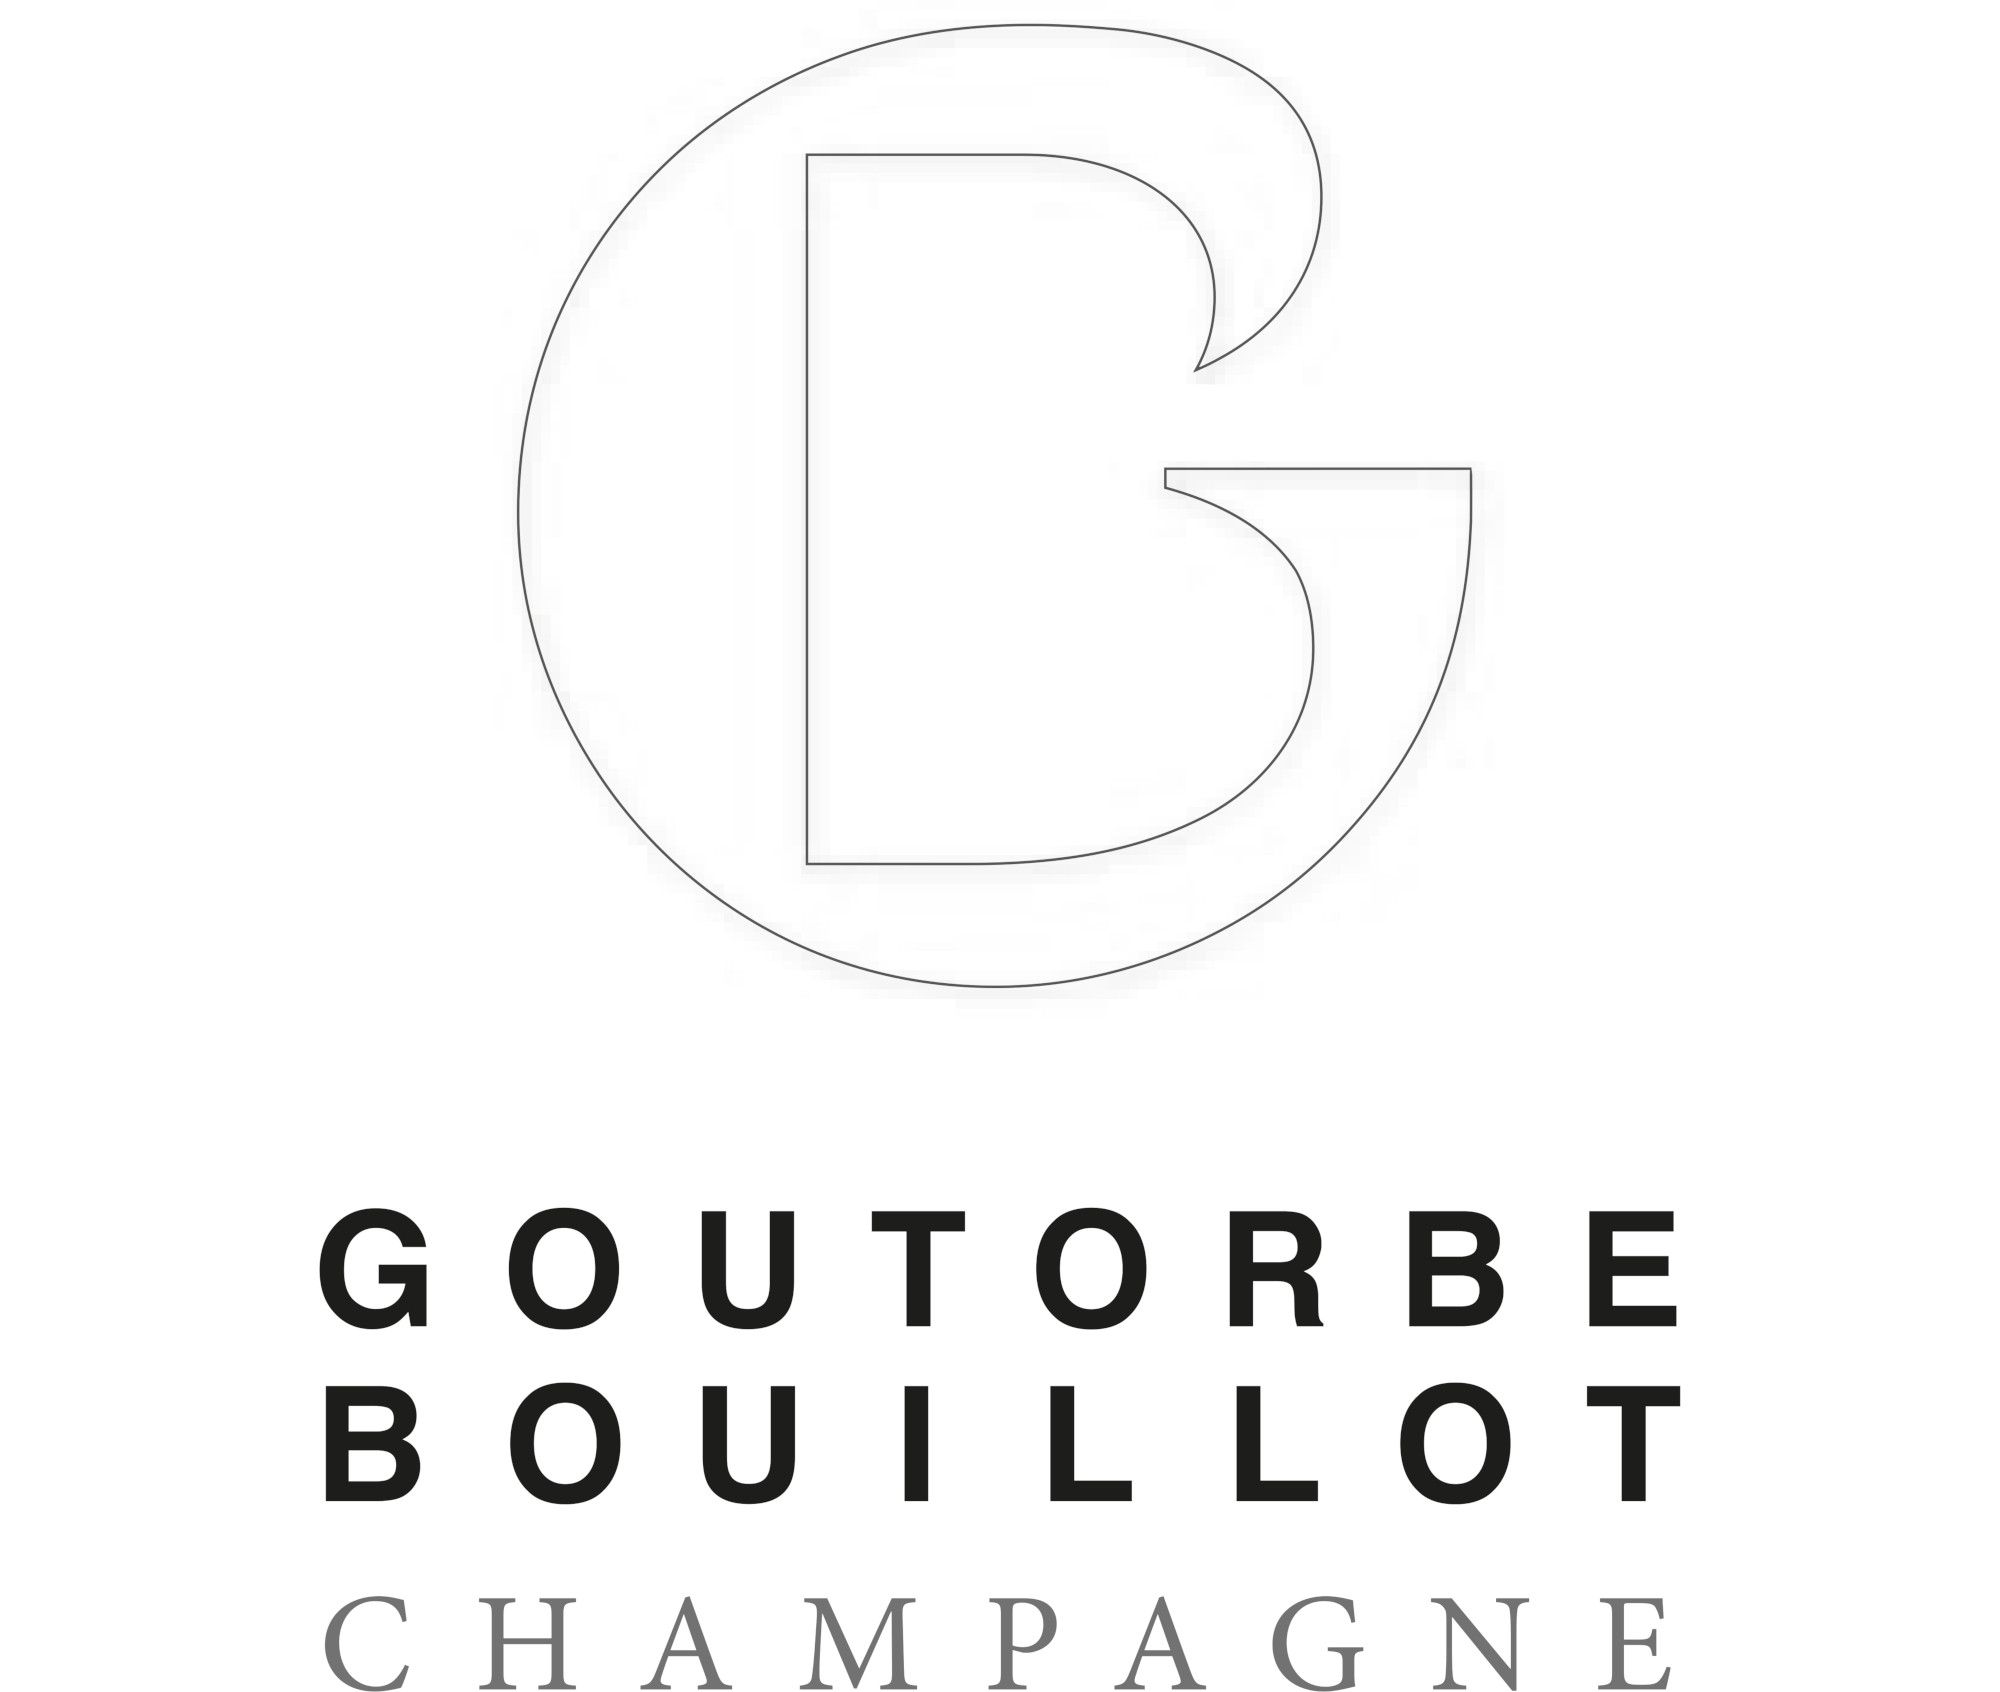 Champagne Goutorbe Bouillot